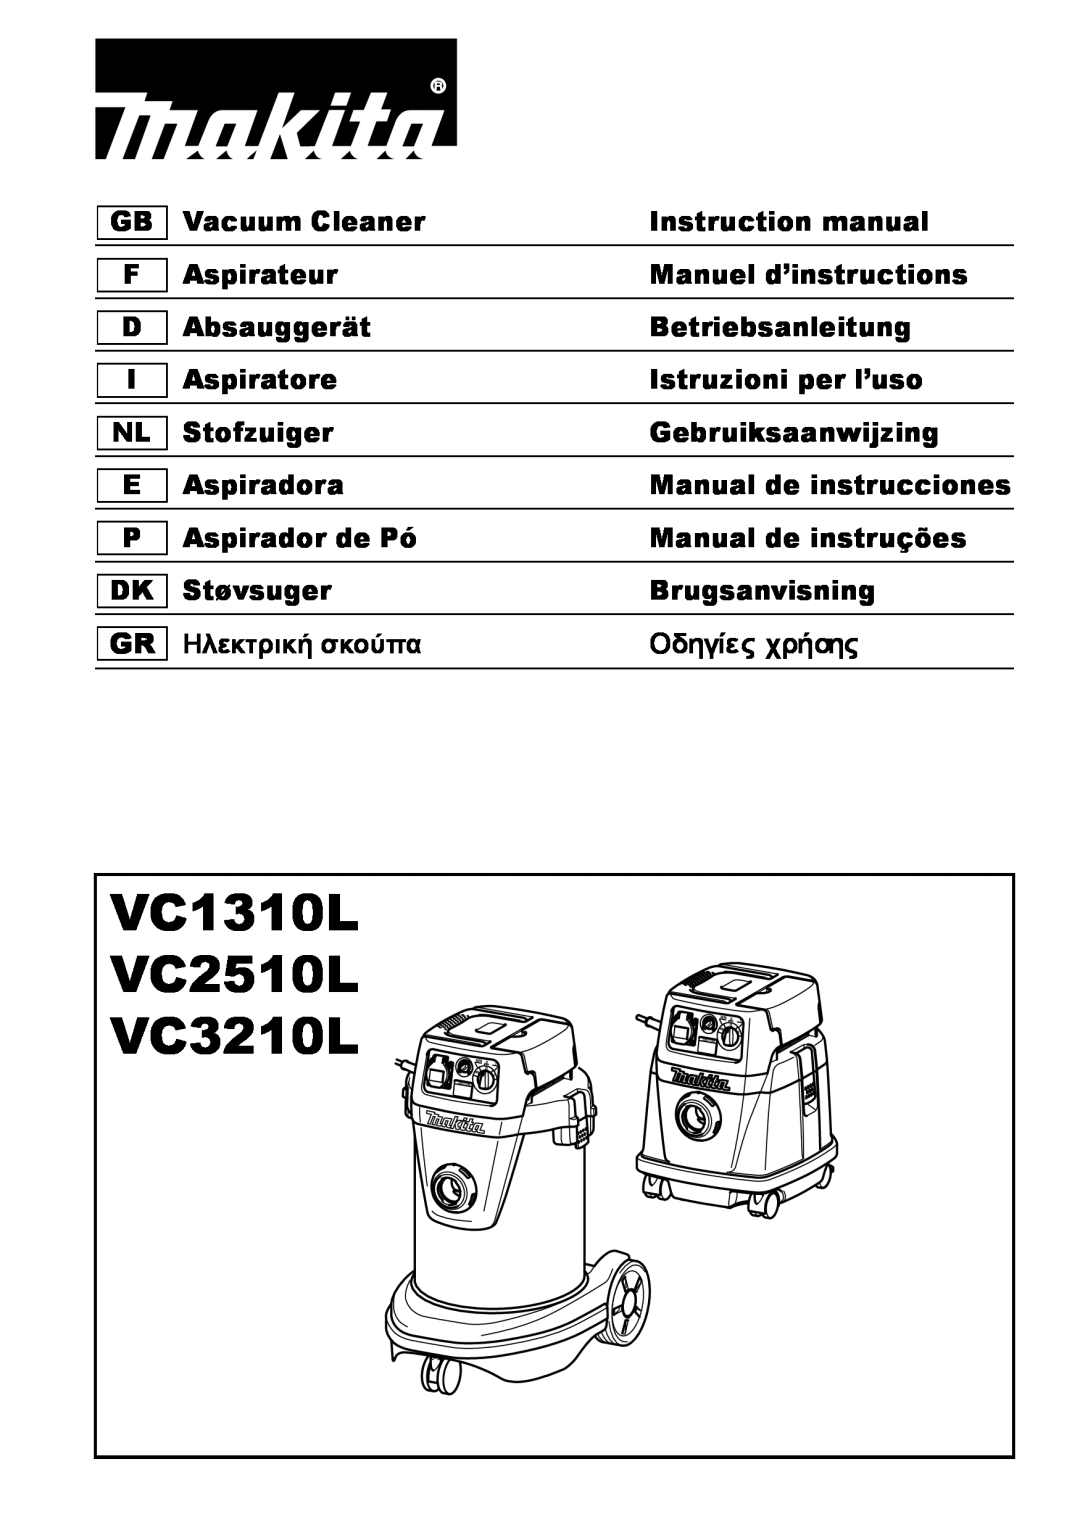 Makita instruction manual Οδηγίες χρήσης, VC1310L VC2510L VC3210L 